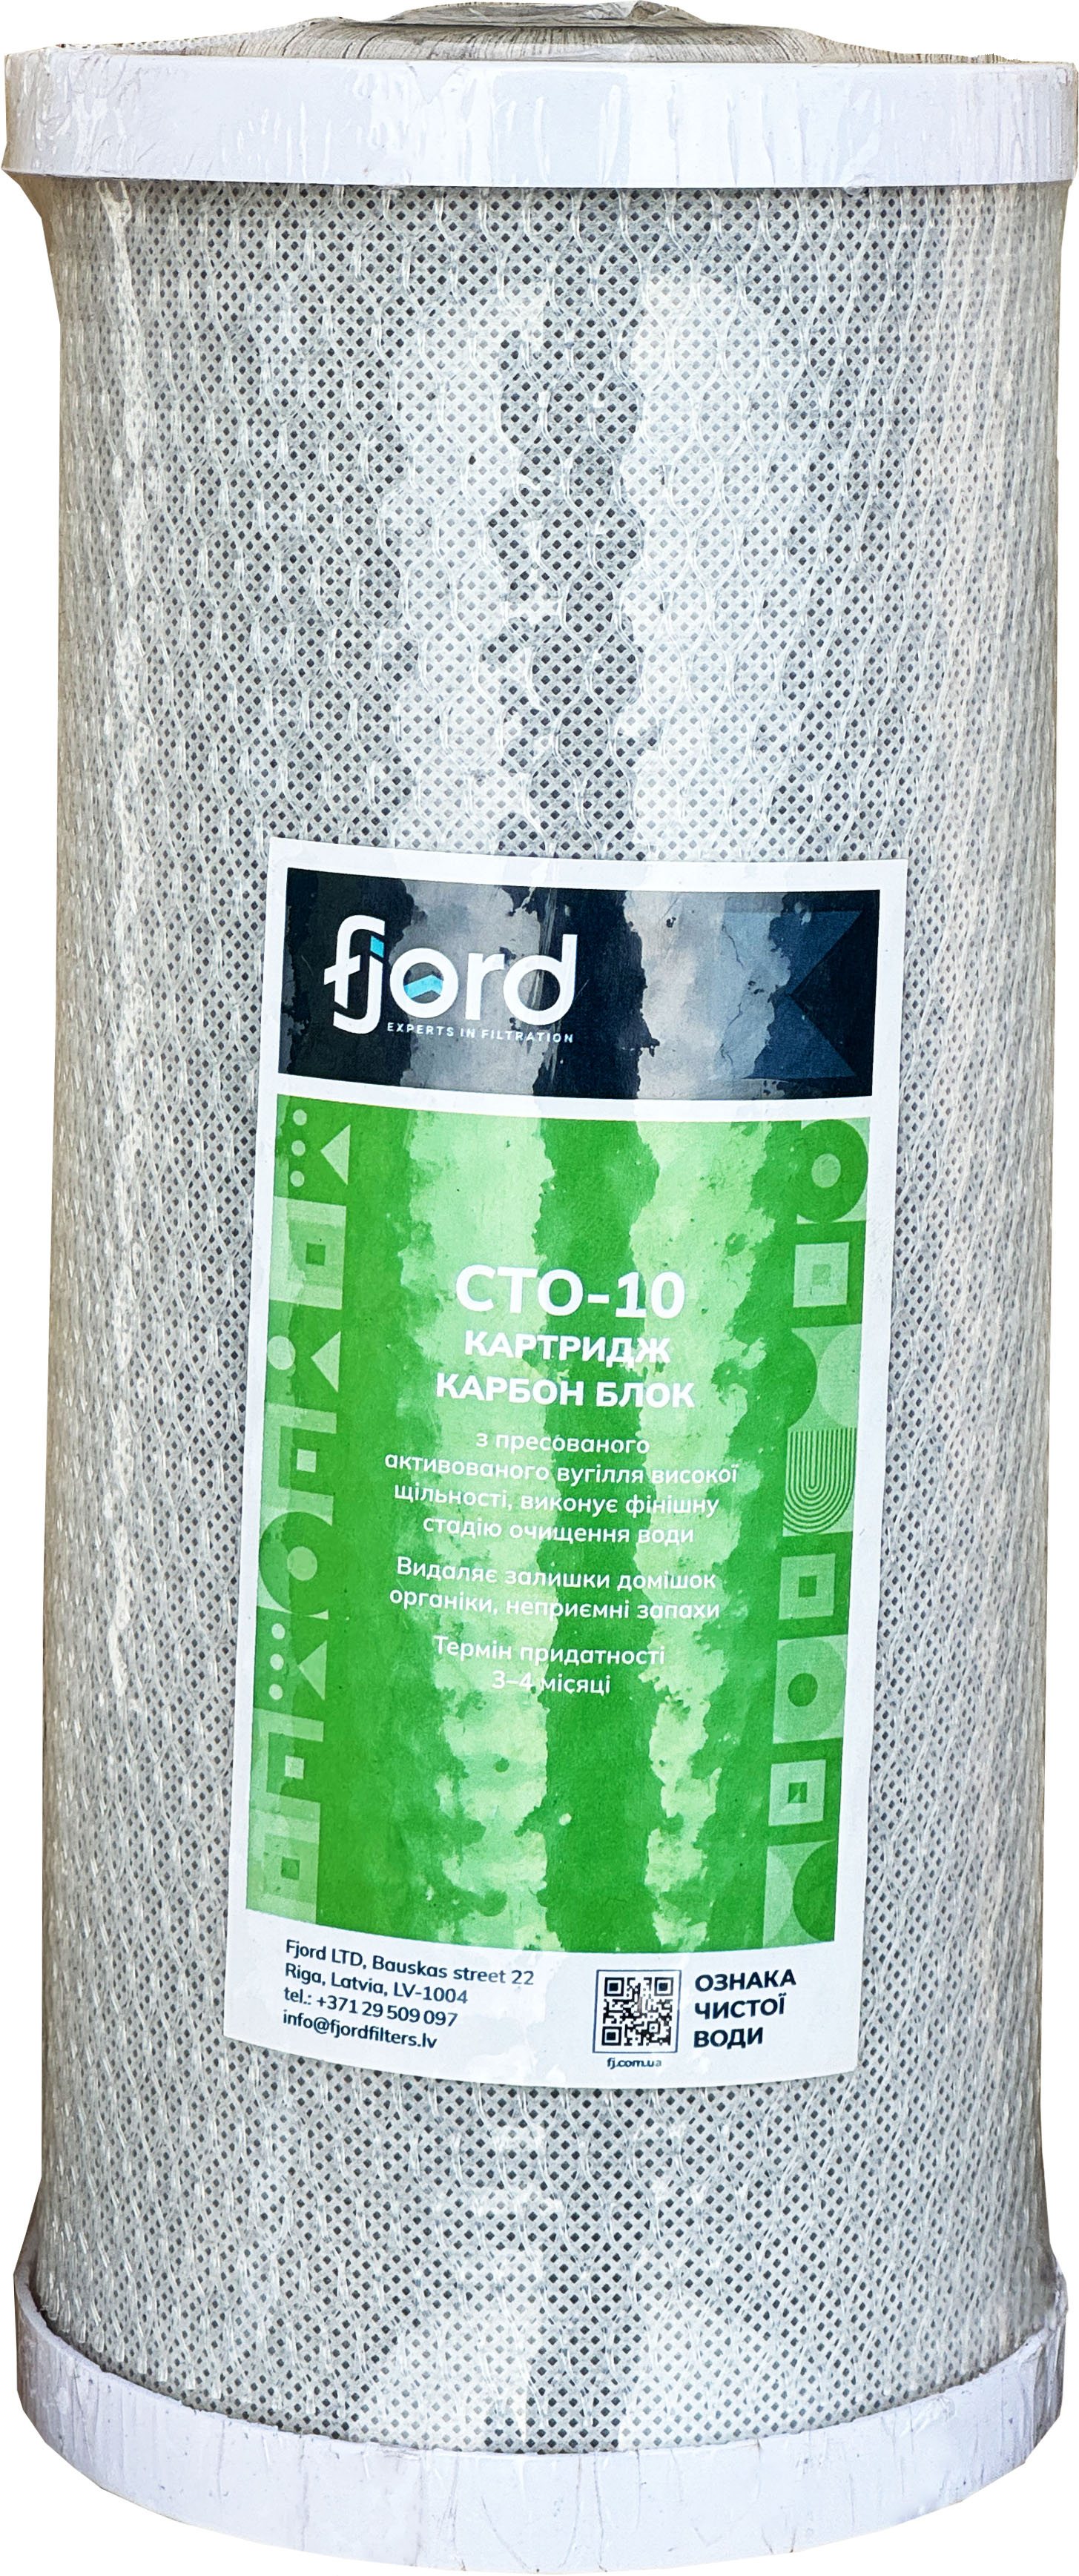 Картридж от пестицидов Fjord CTO-BB10 (уголь)